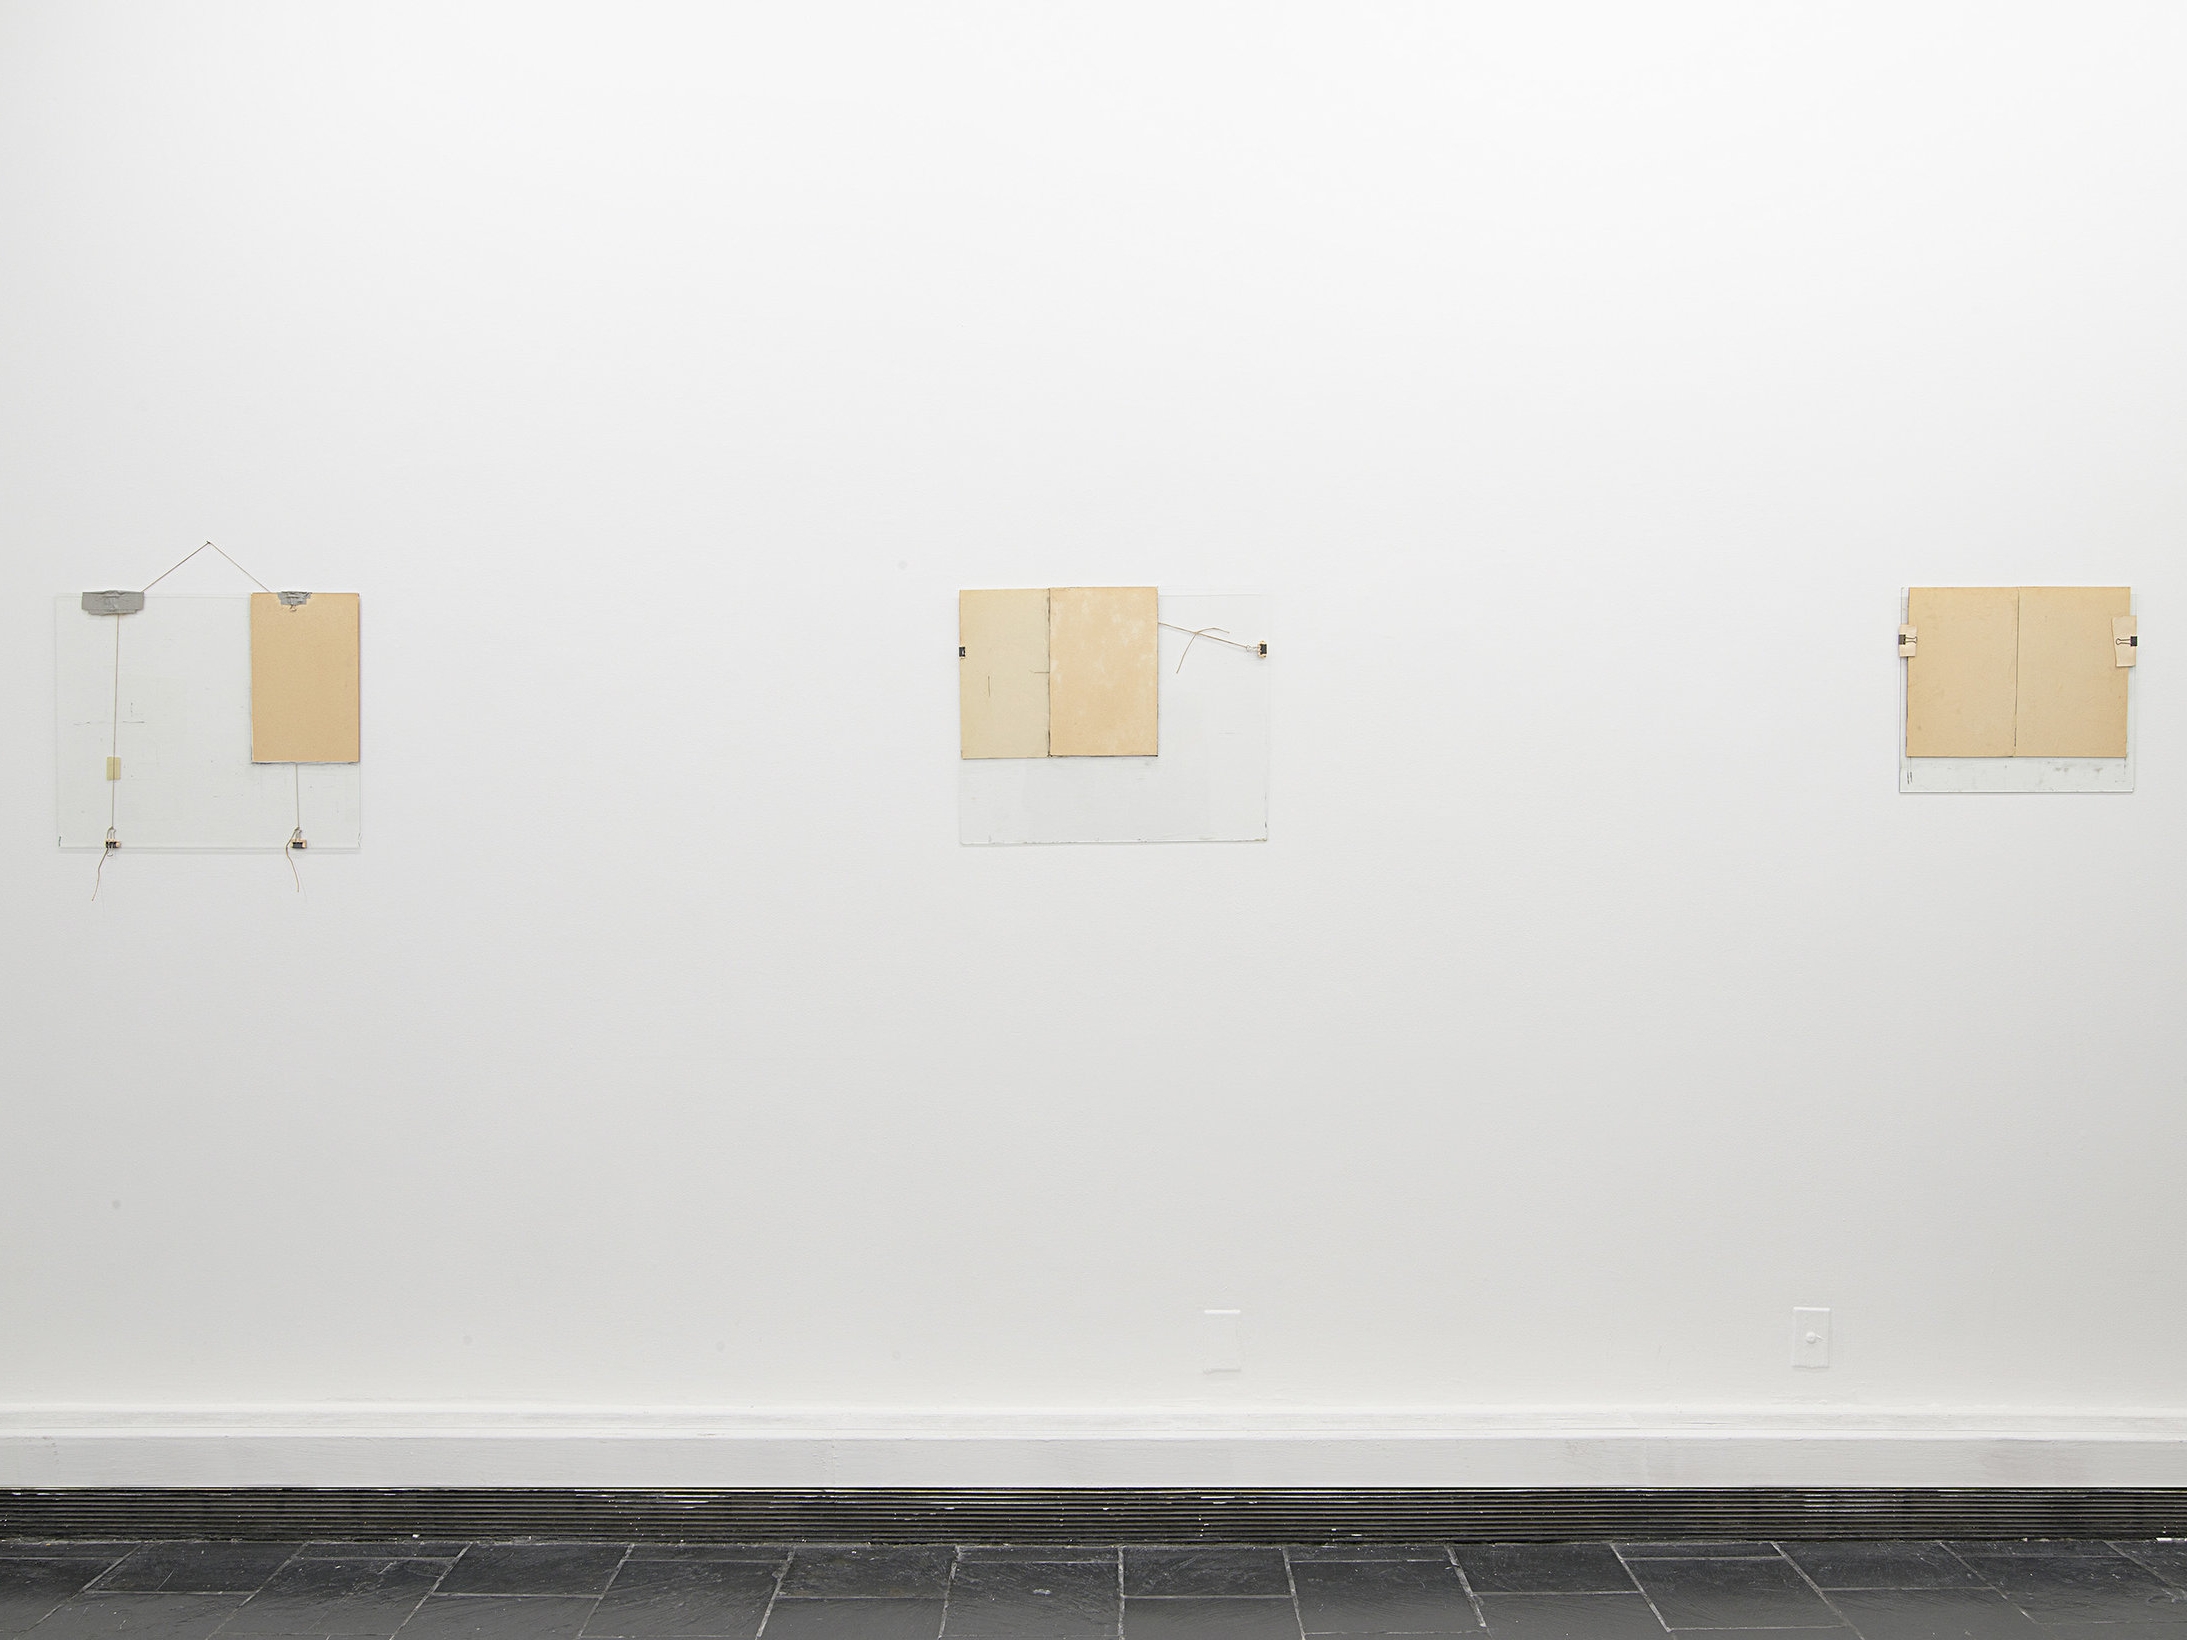  Nahum Tevet  Works on Glass, 1972-1975,  installation view, Leubsdorf Gallery, Hunter College, New York, September 2016. 